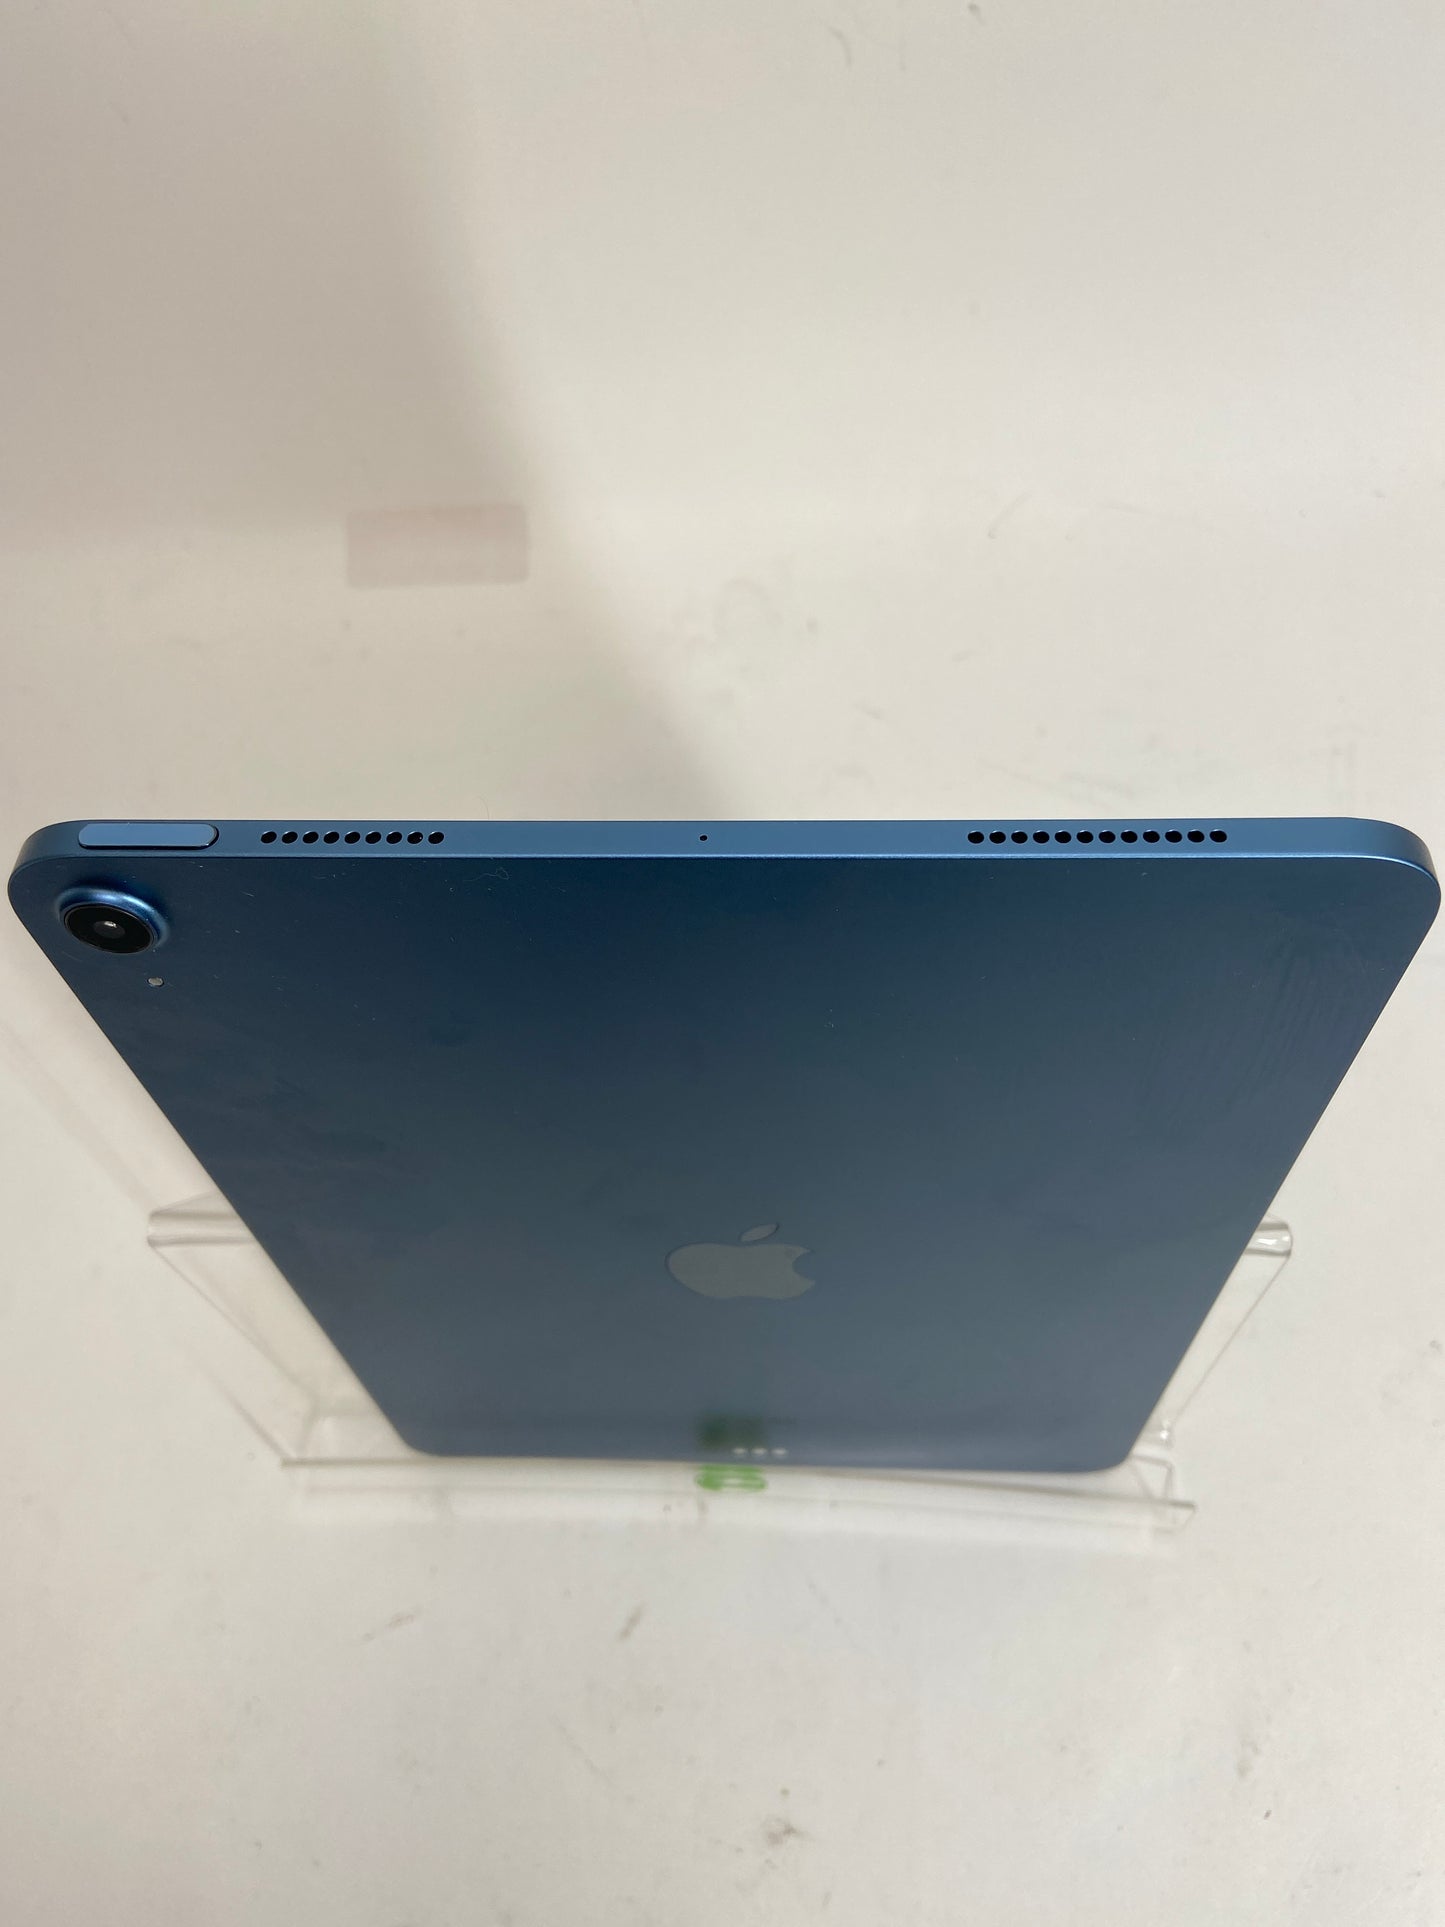 WiFi Only Apple iPad 5th Gen 256GB 17.5.1 Sky Blue MM9N3LL/A